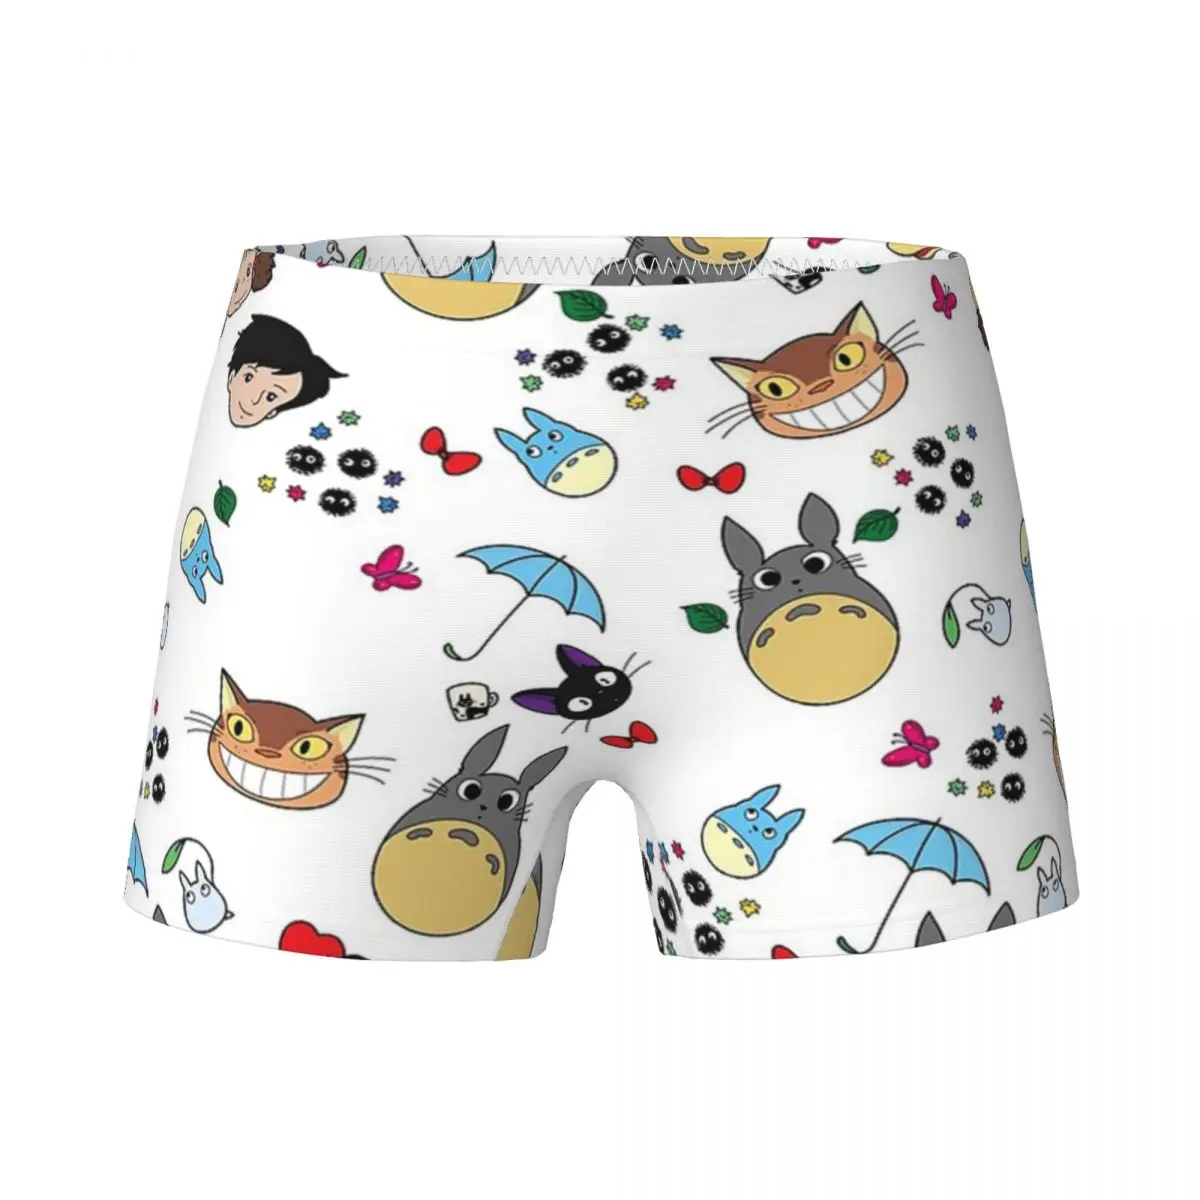 

Youth Girl Ghibli Spirited Away Boxers Children's Cotton Pretty Underwear Kids Teenagers Totoro Underpants Briefs Size 4T-15T